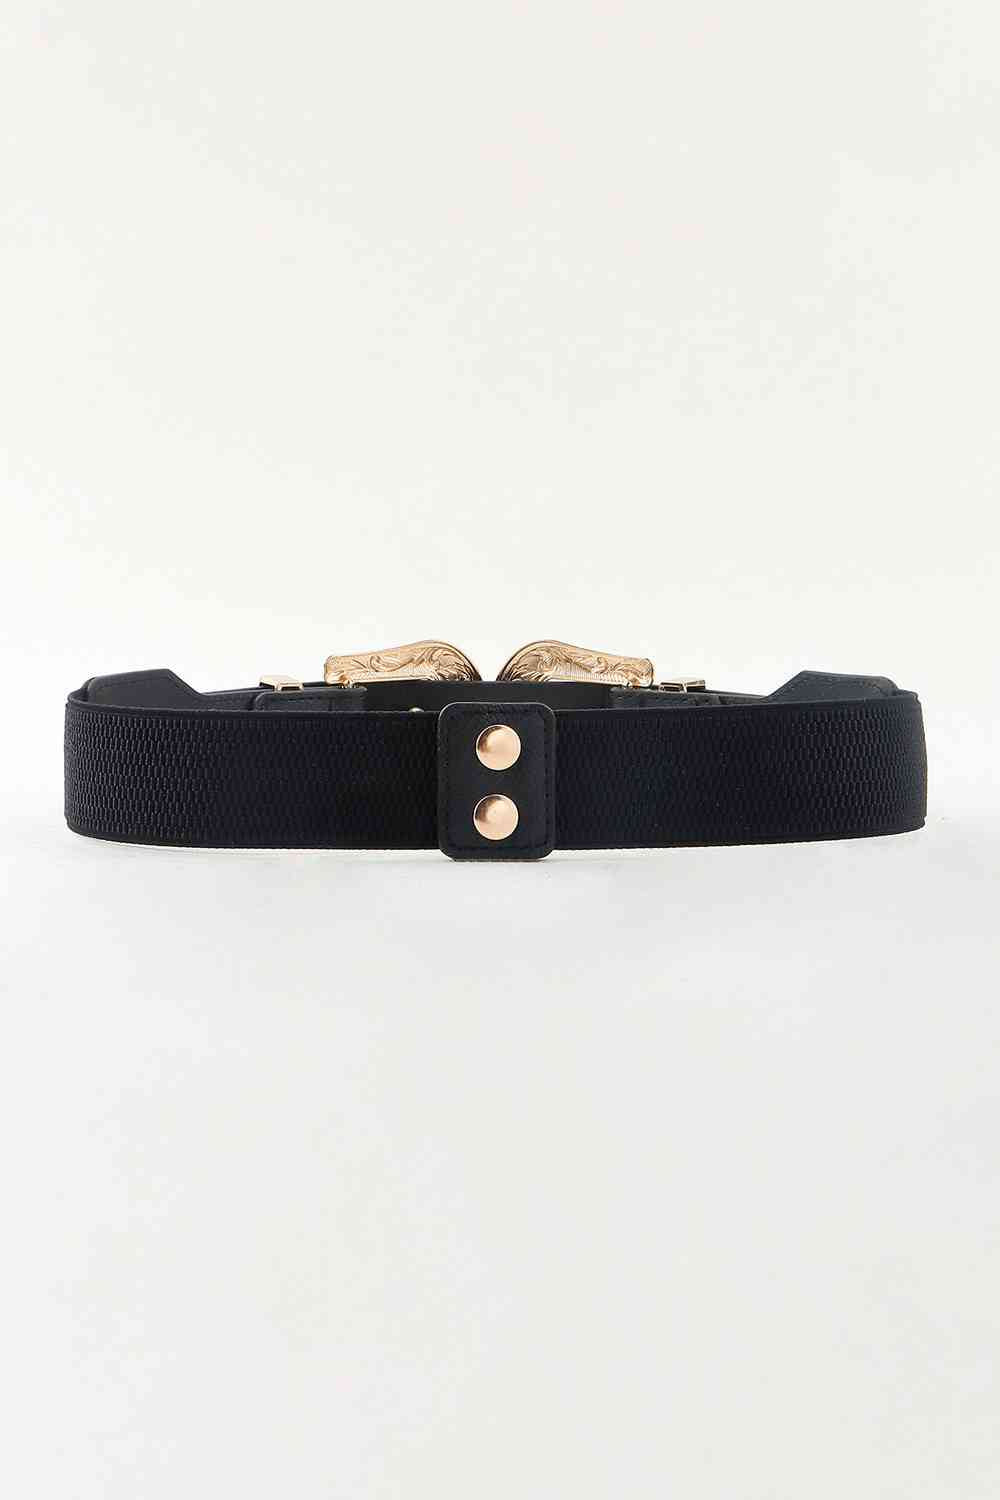 Symmetrical Zinc Alloy Buckle PU Leather Belt - Belt - FITGGINS